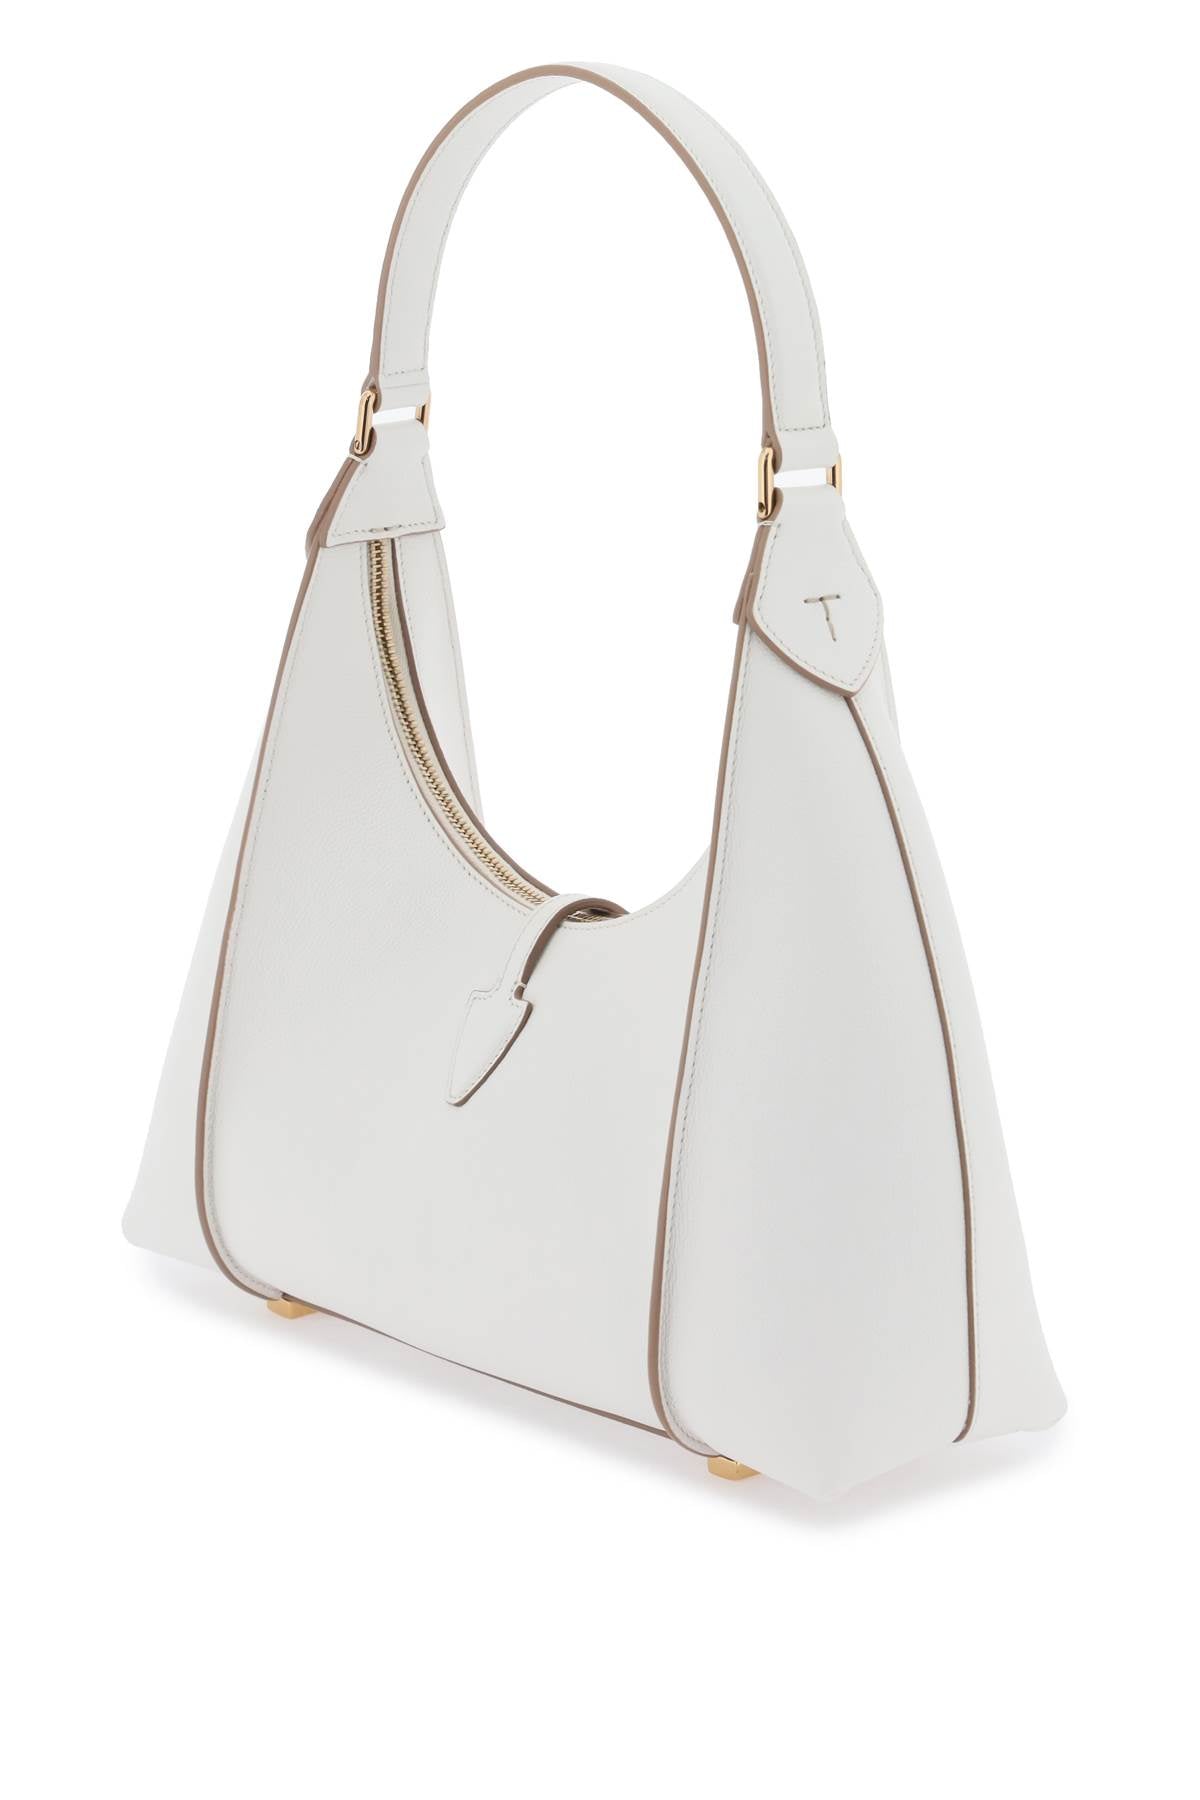 TOD'S Timeless White Calfskin Hobo Handbag with T-Shaped Metal Charm - Small 31x27x11cm